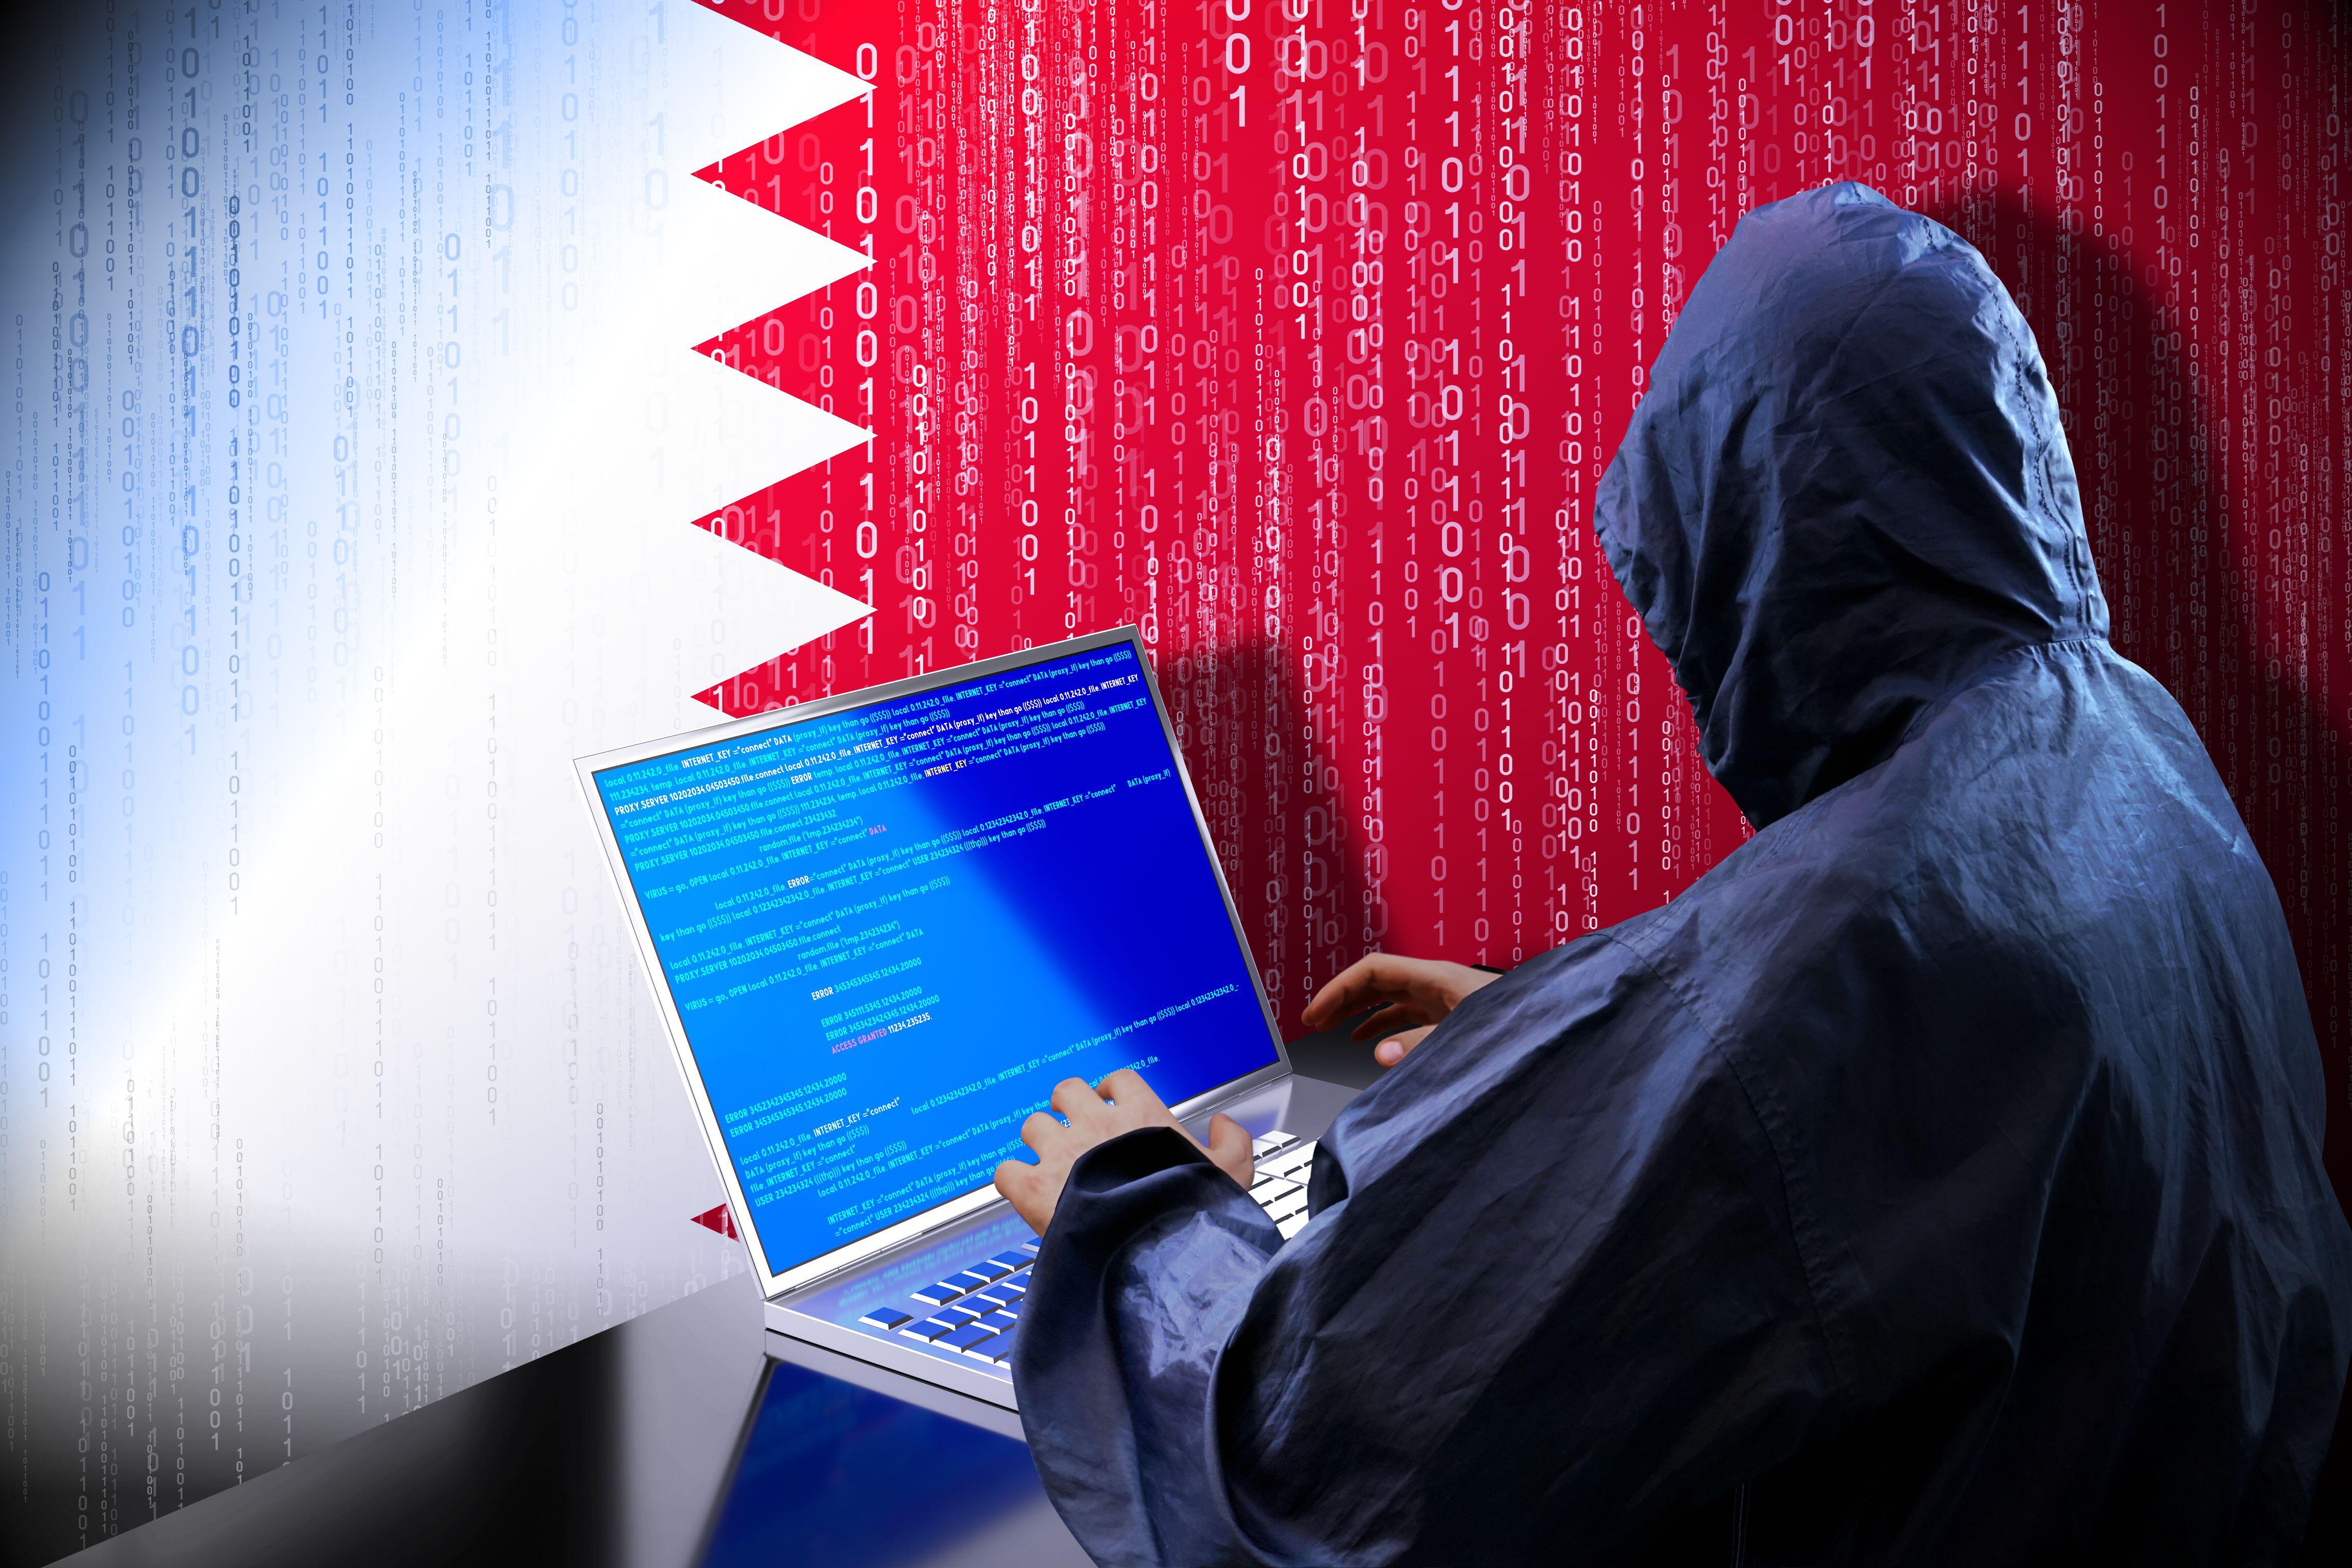 From Dark Reading – Qatar Cyber Agency Runs National Cyber Drills